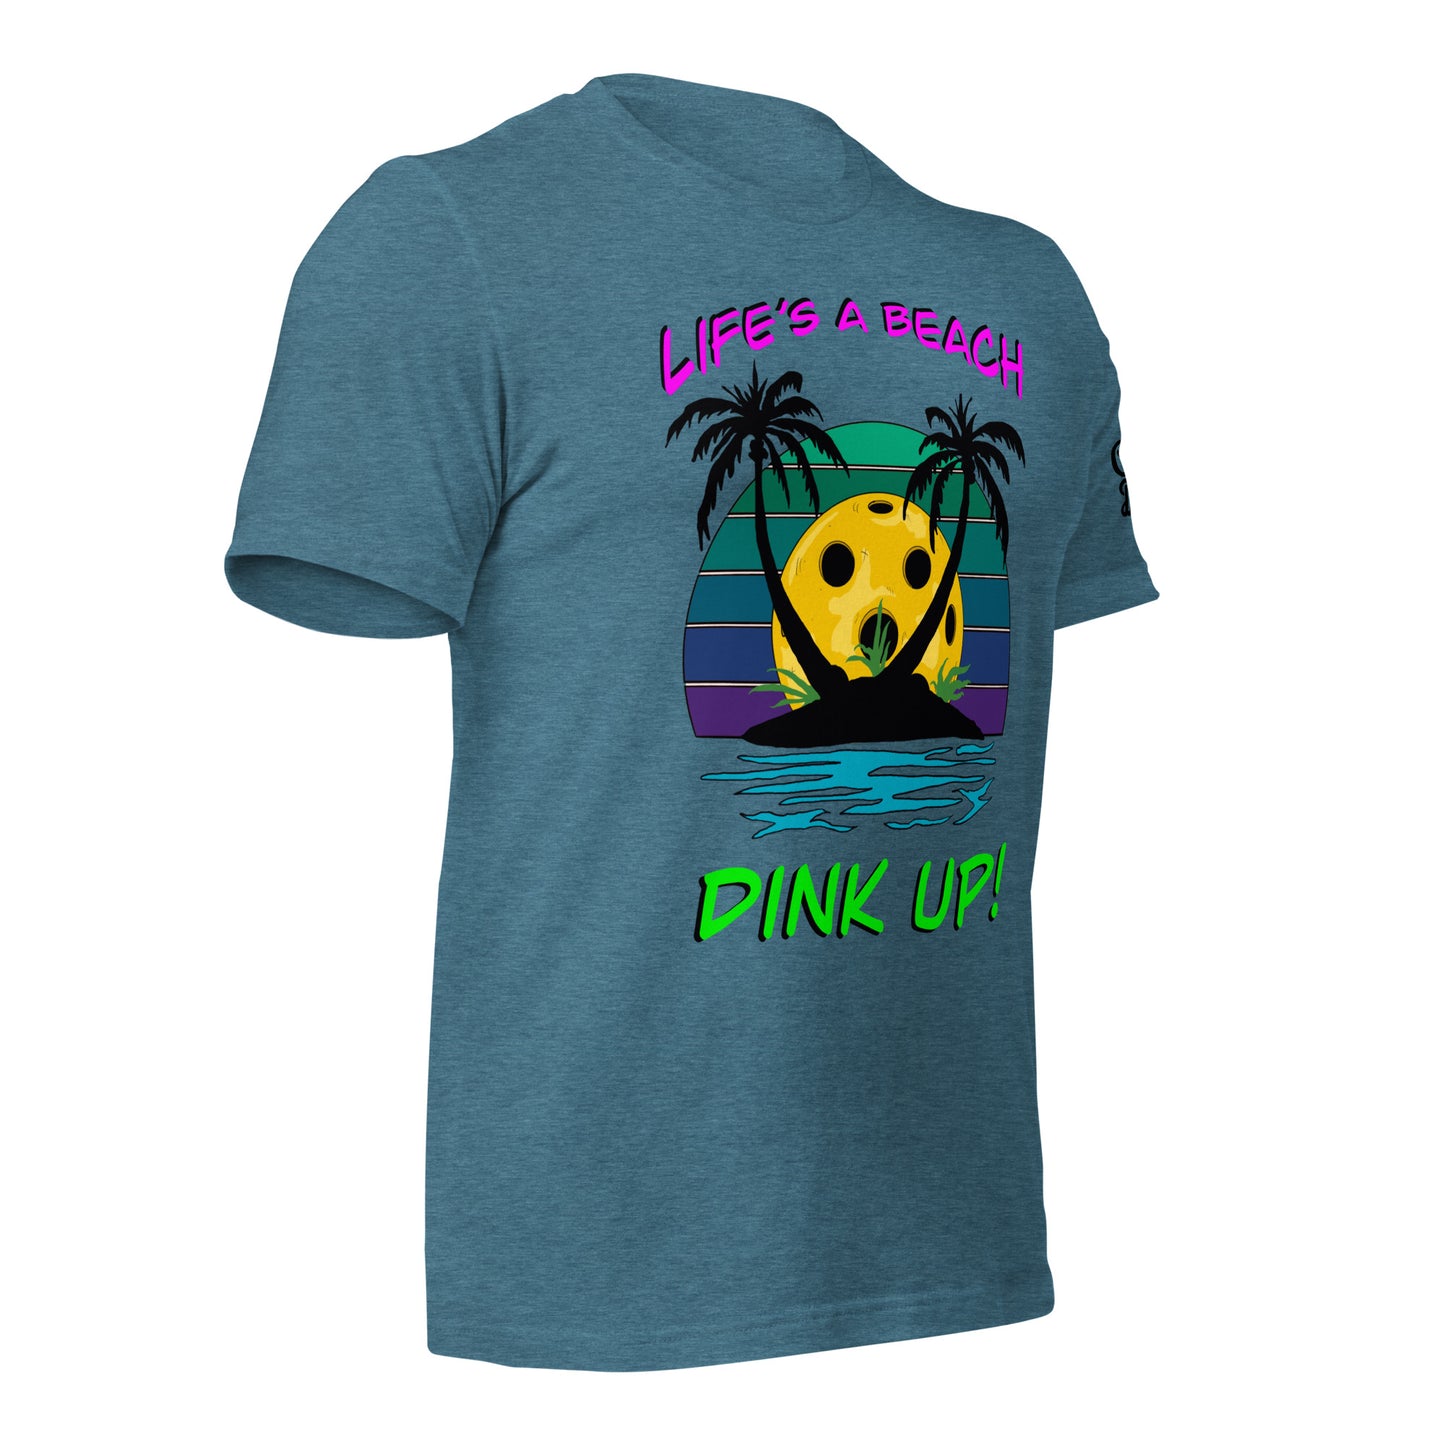 Life’s a Beach t-shirt